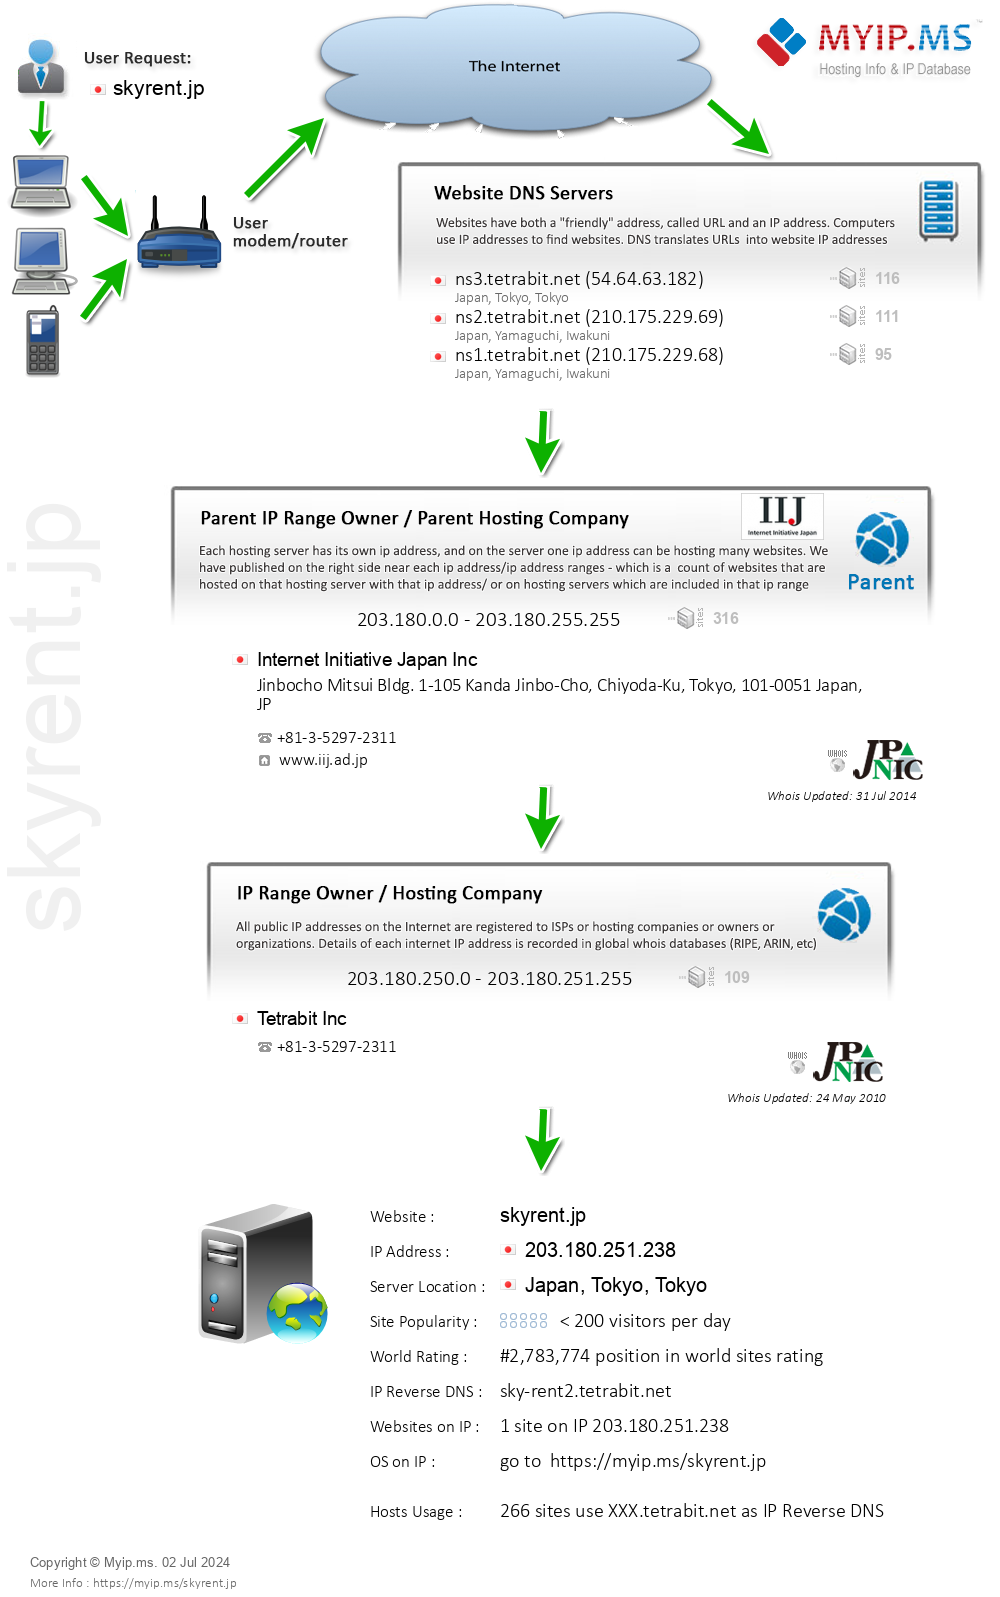 Skyrent.jp - Website Hosting Visual IP Diagram